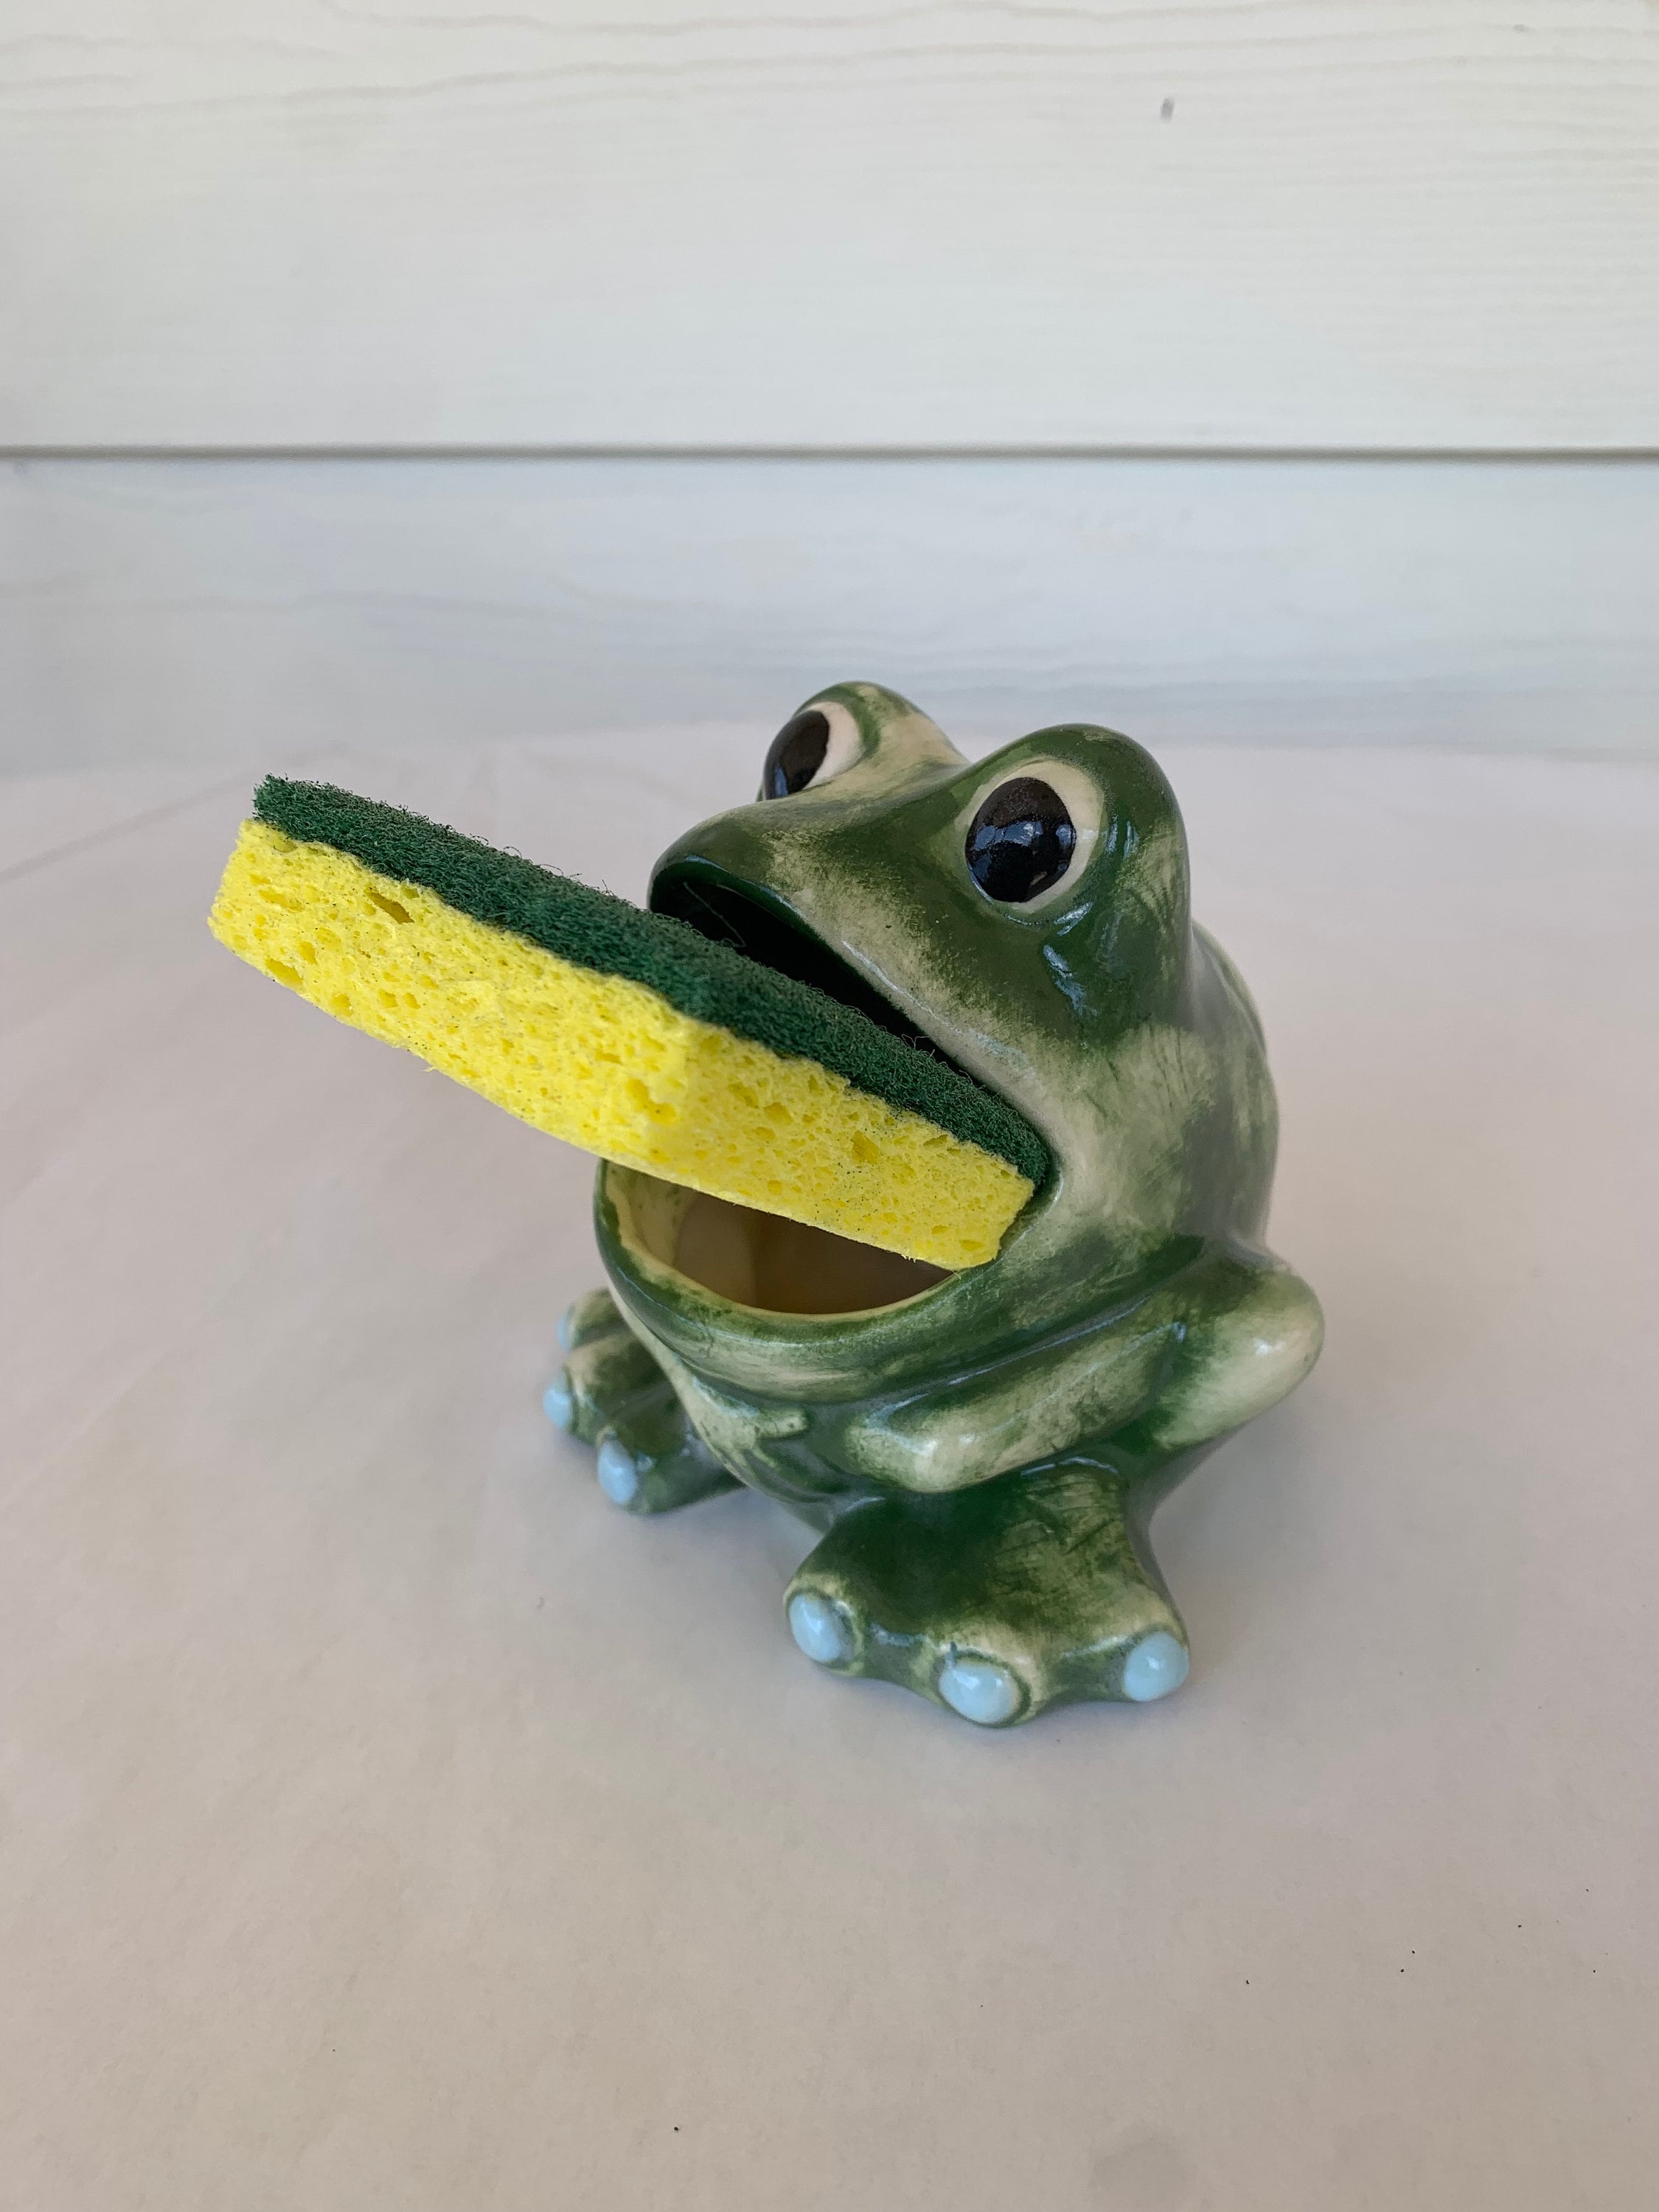 Stoneware Frog Sponge Holder Olive Green Glaze Finish, Well Made 4.5”